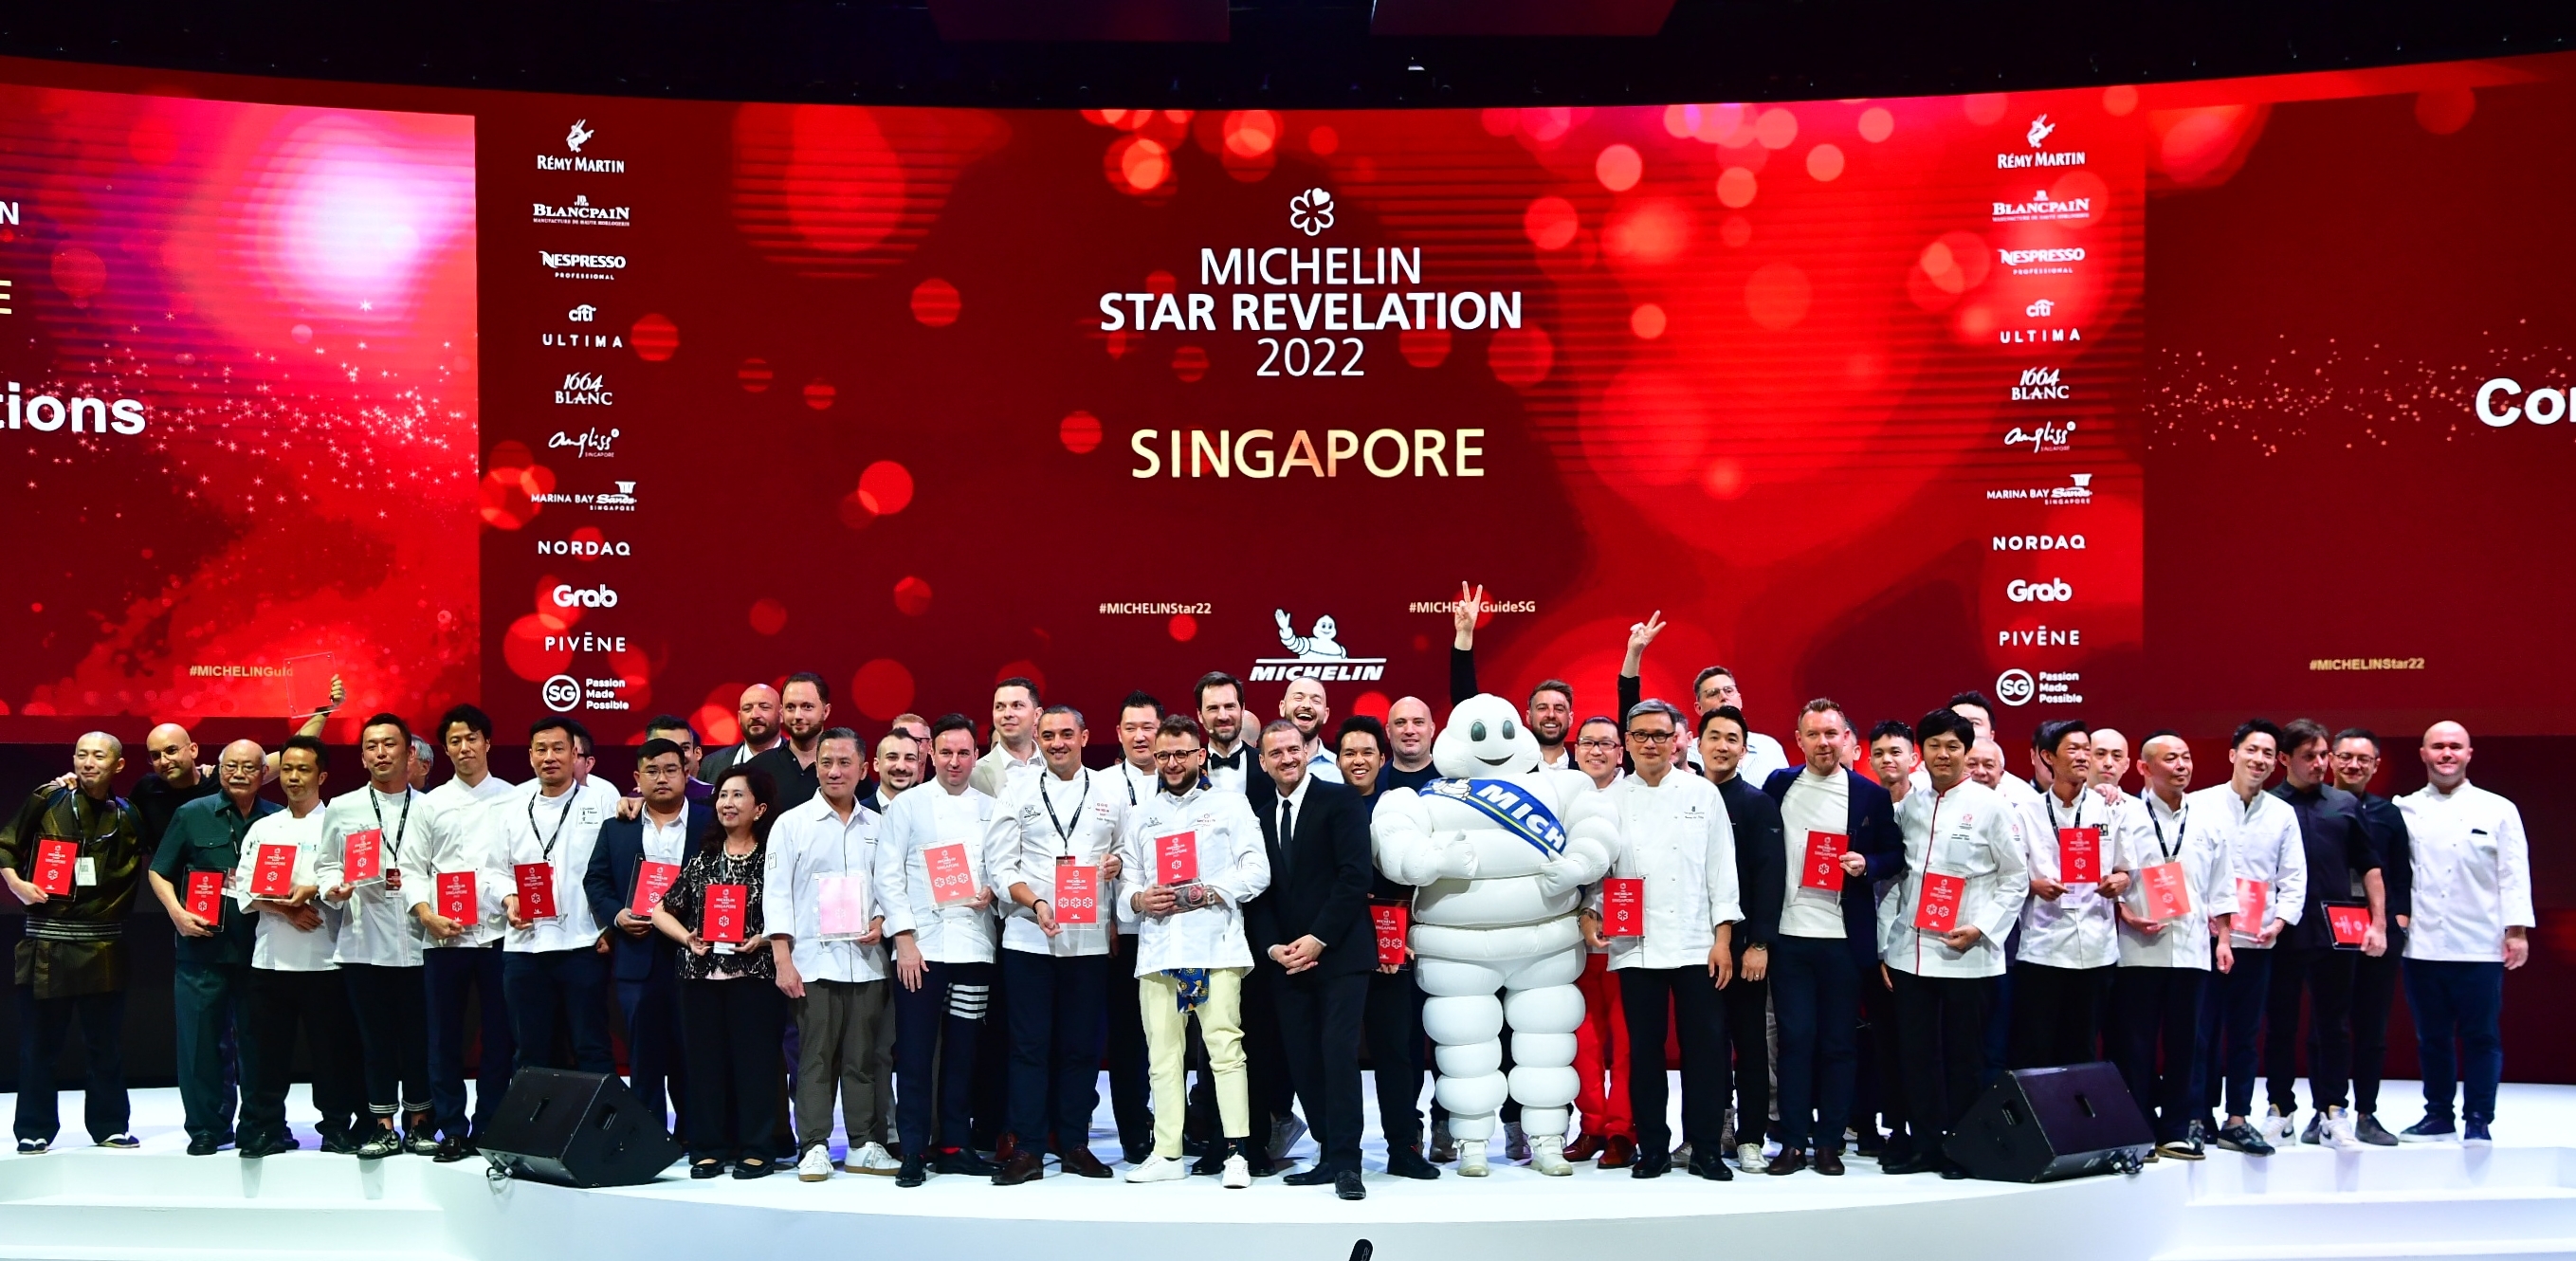 Michelin Guide Singapore 2022: The Full List Of Michelin-starred Restaurants